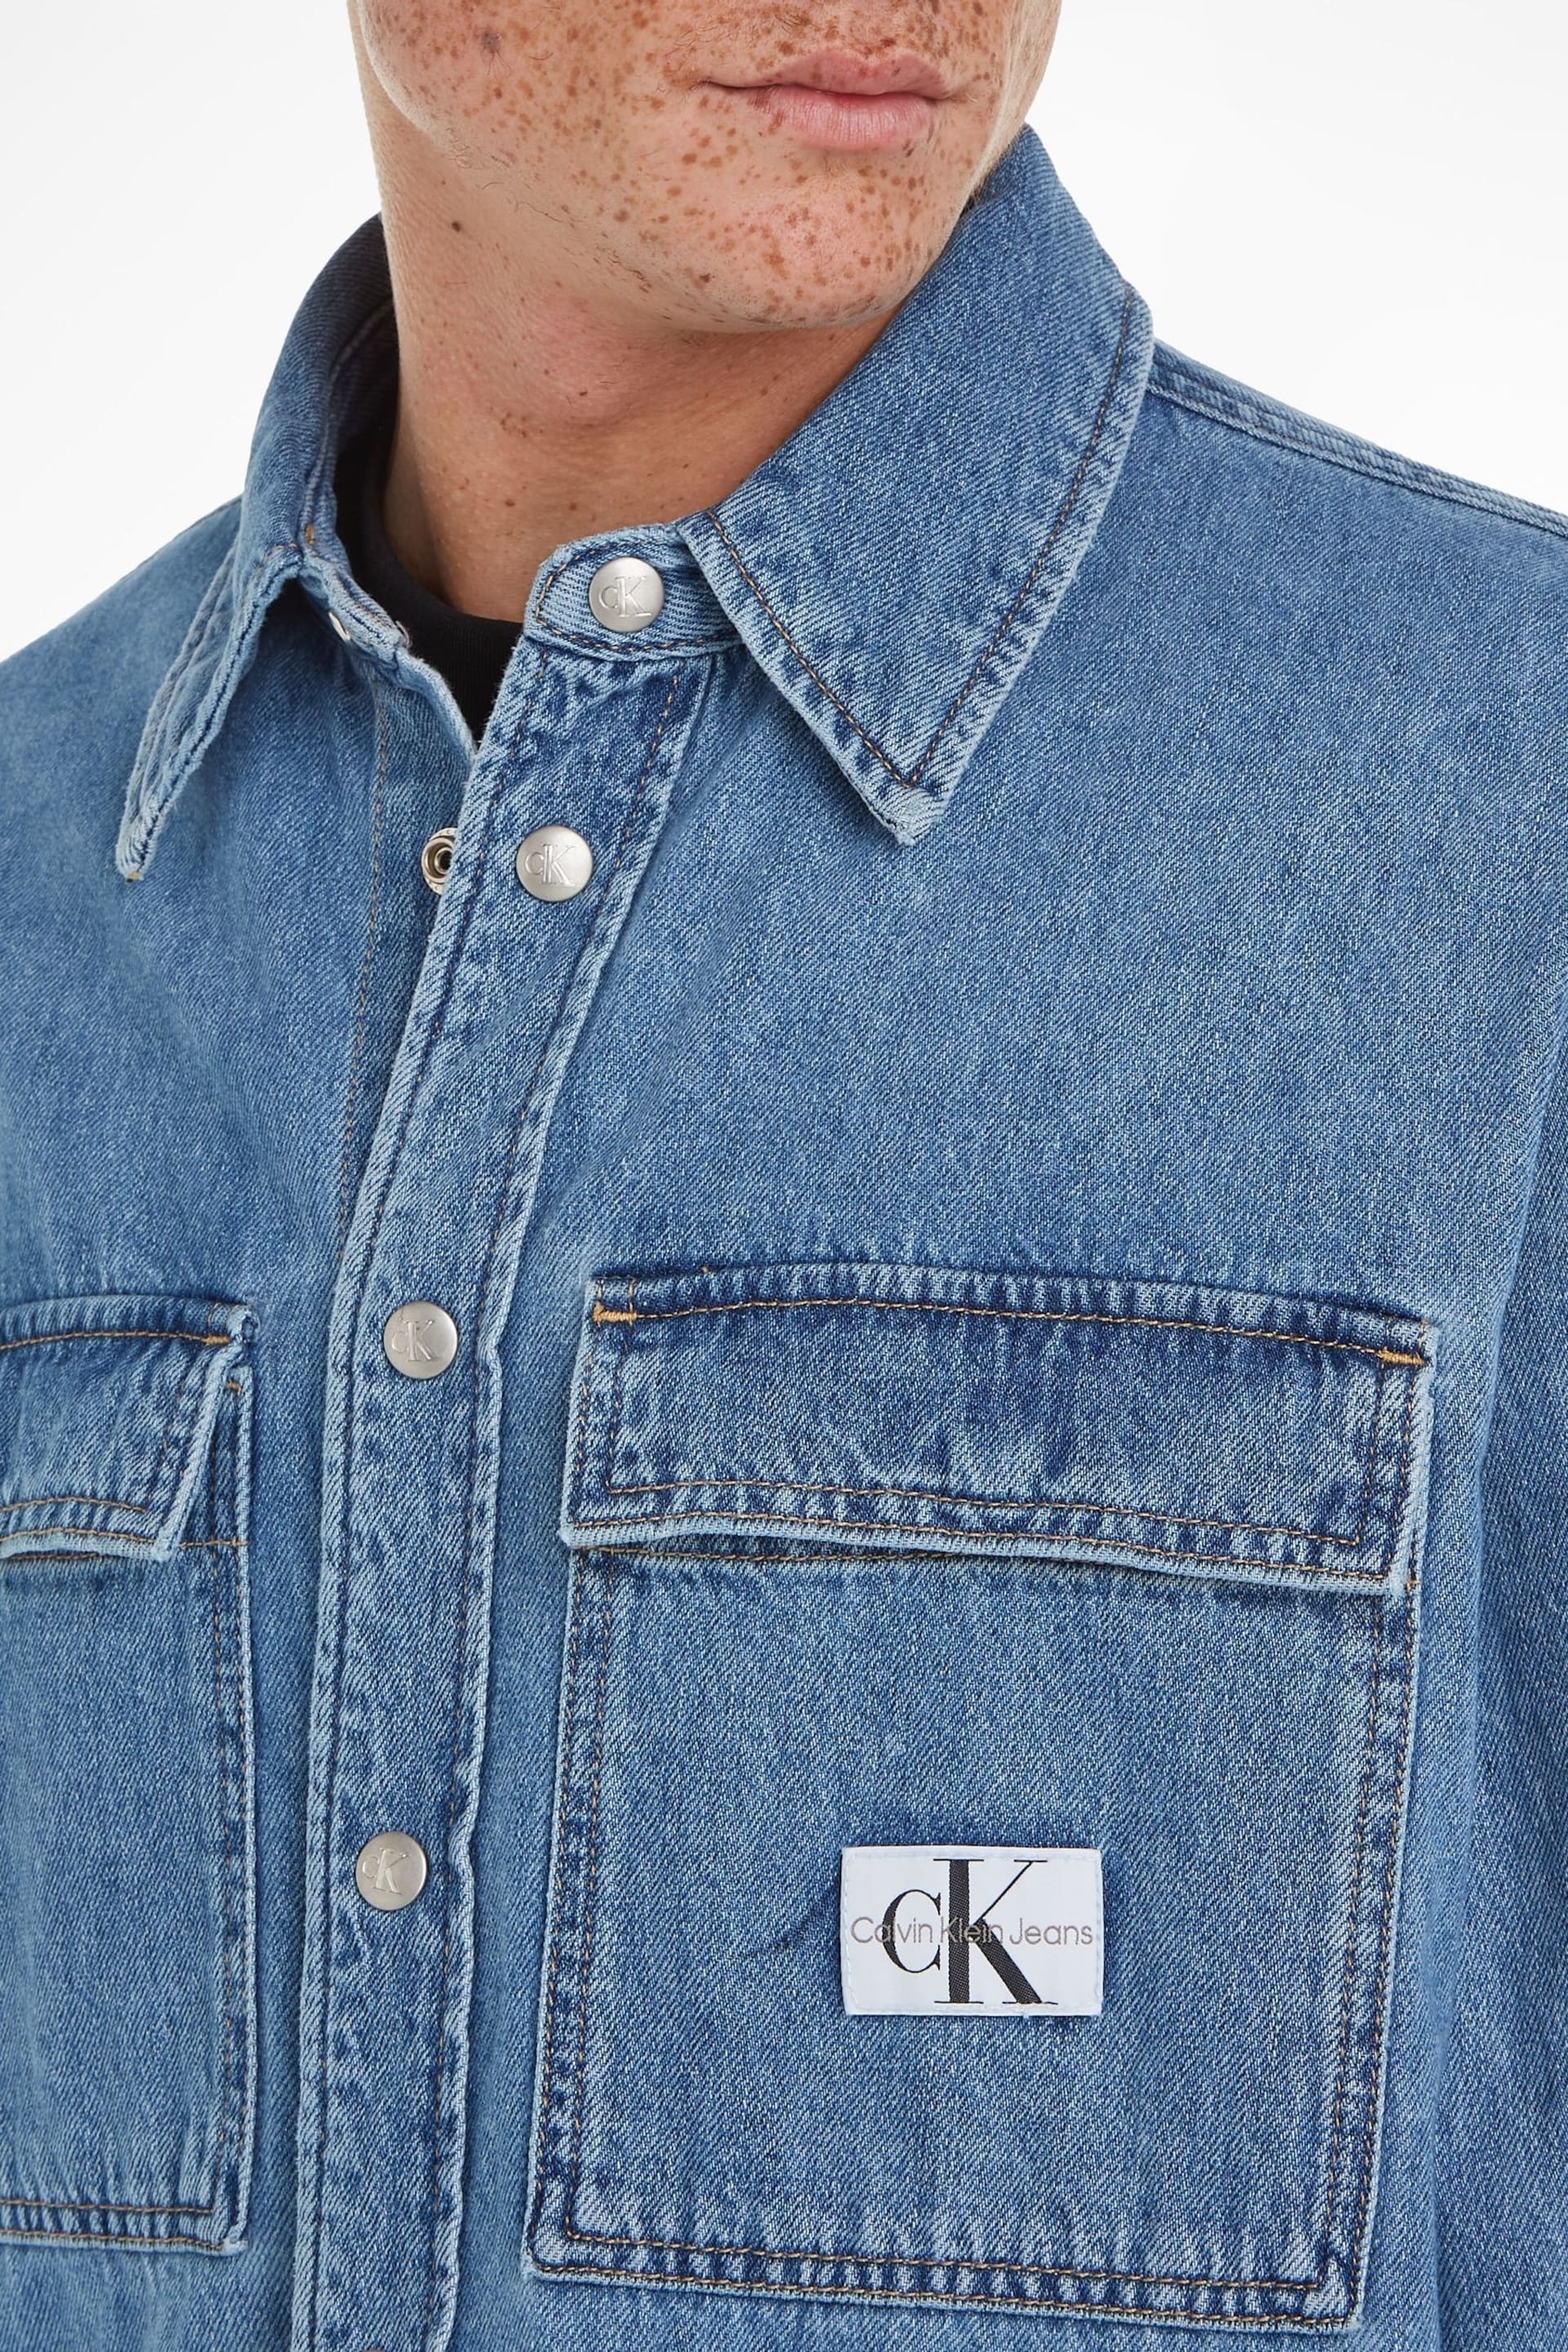 Calvin Klein Jeans Blue Shirt - Image 4 of 6